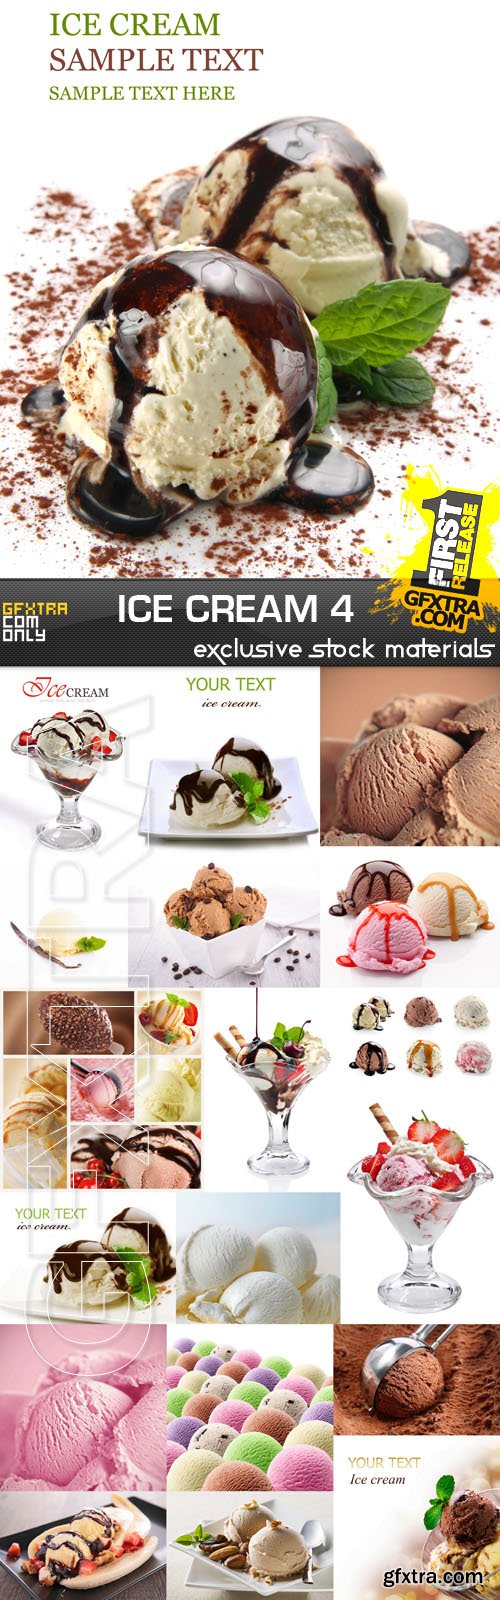 Ice Cream Collection 4, 25xJPG